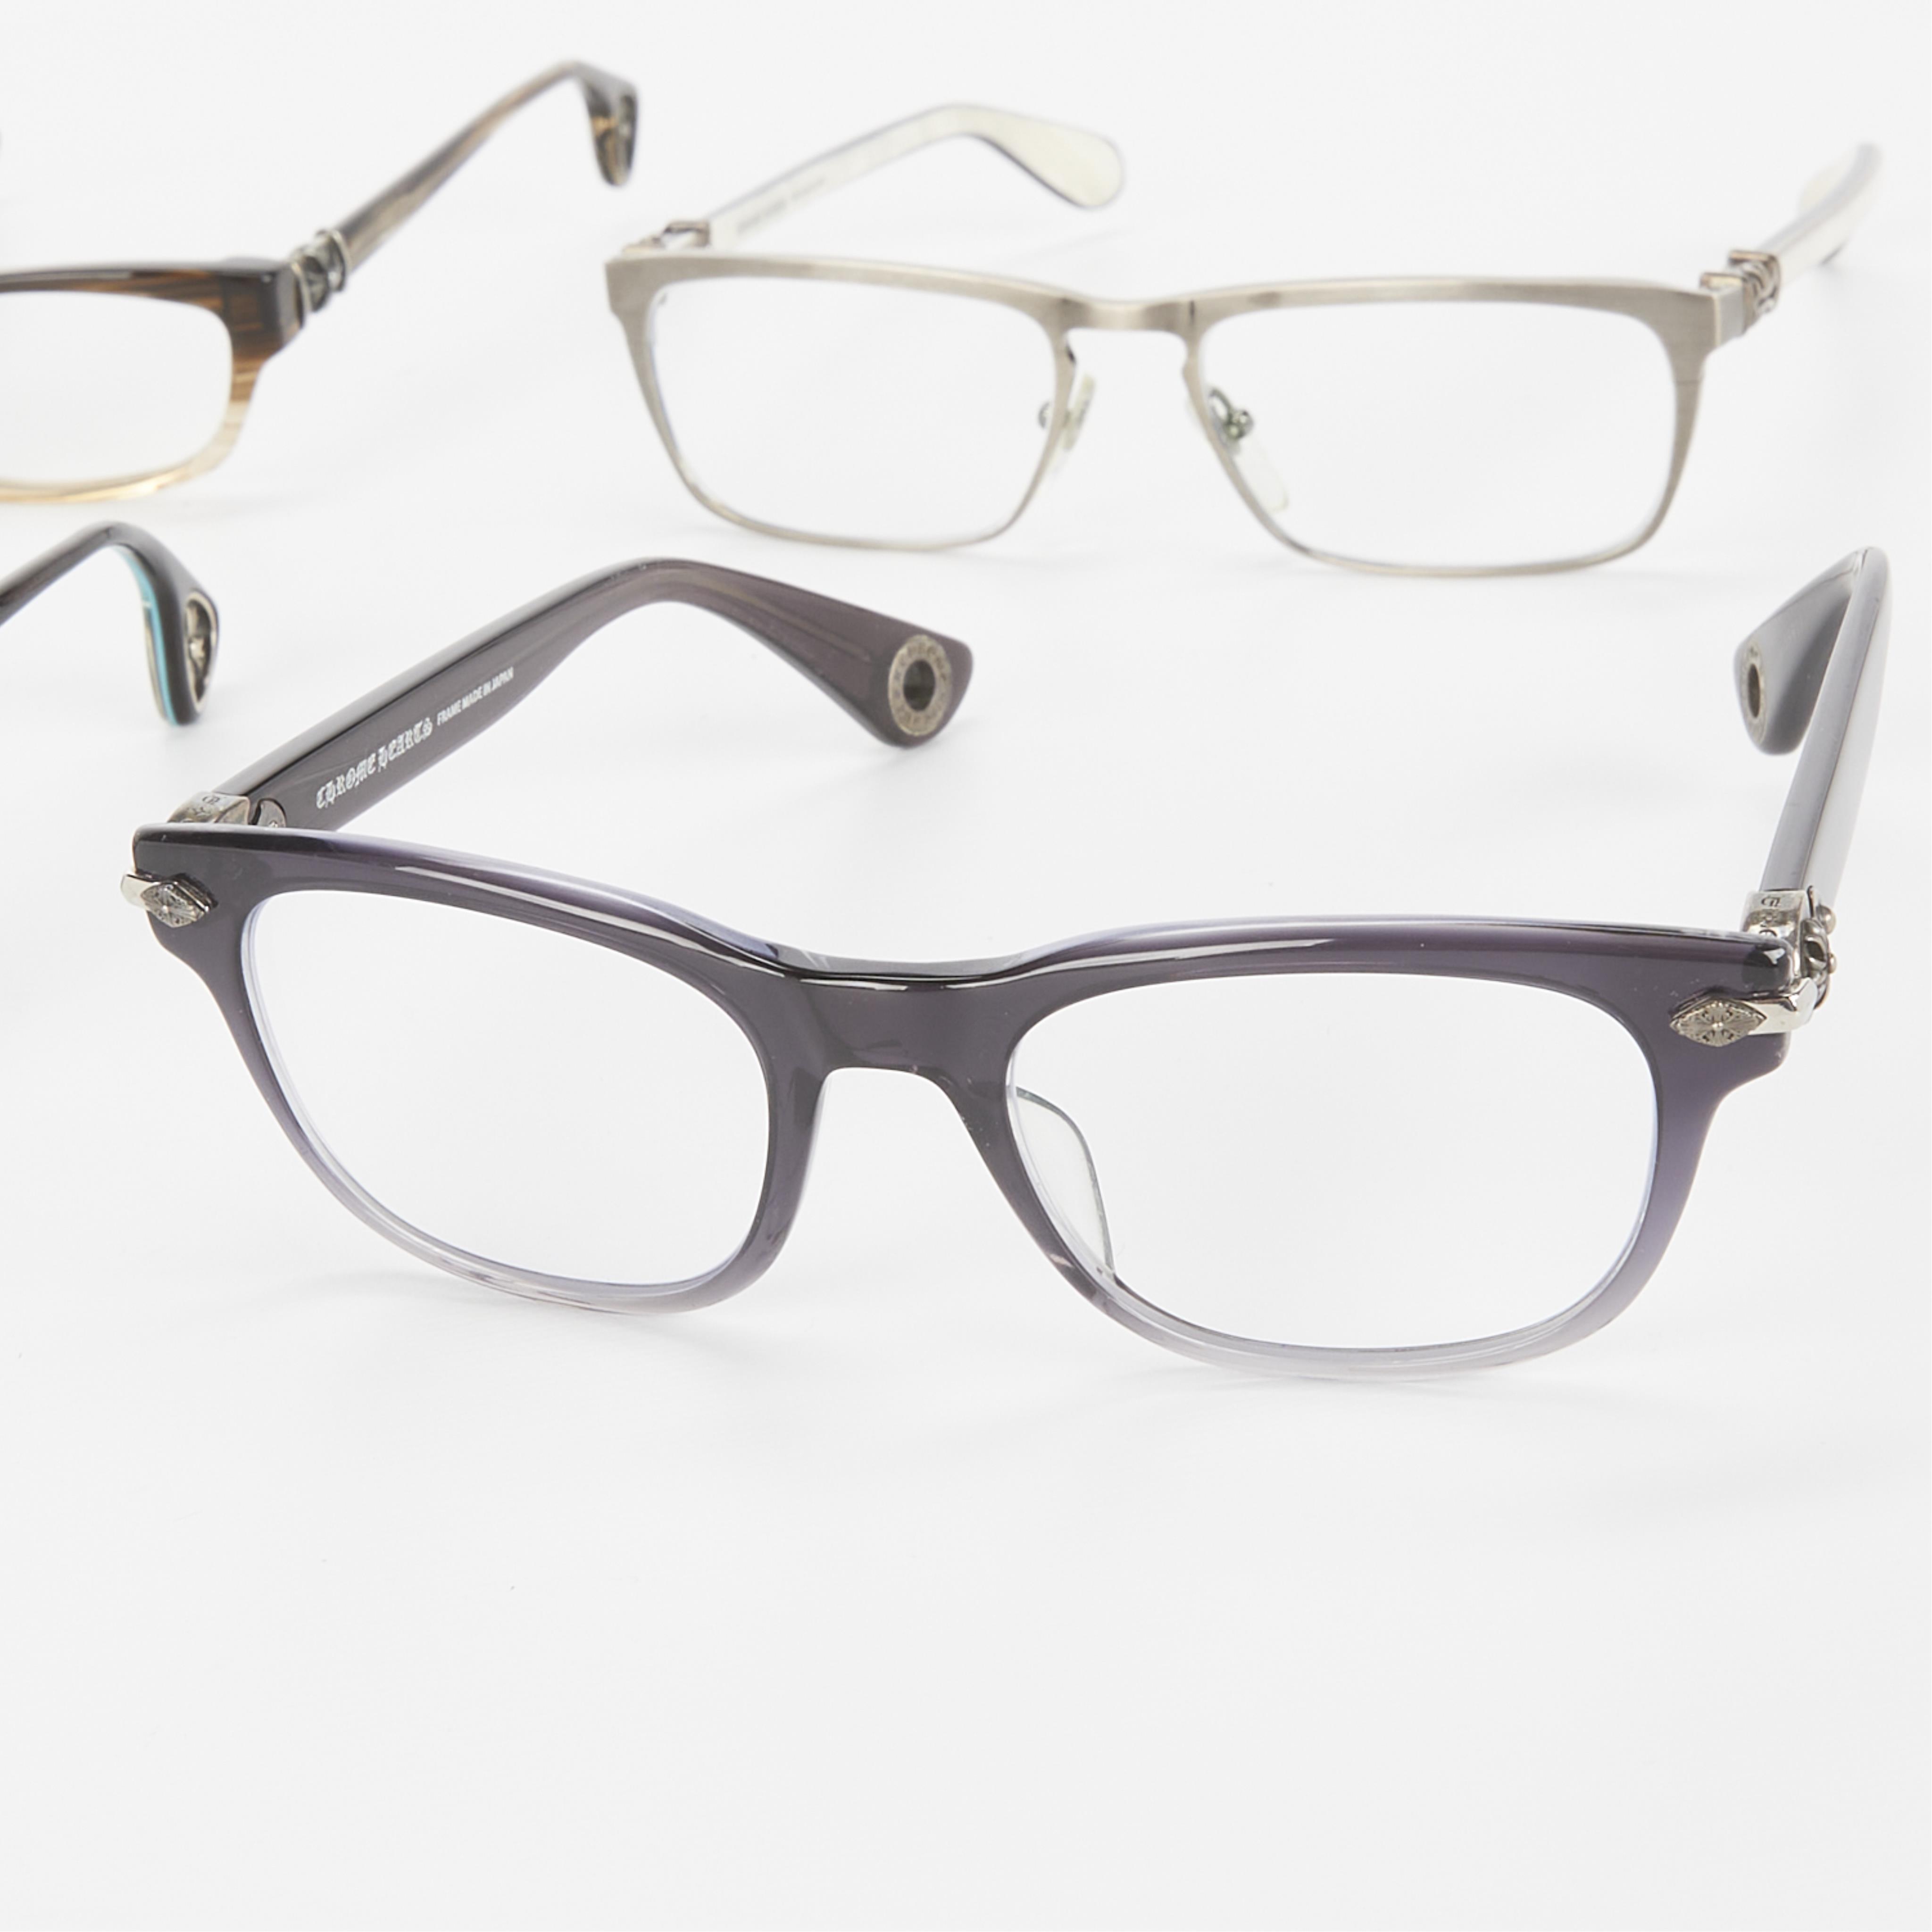 Grp of 6 Chrome Hearts Eyeglasses - Image 5 of 12